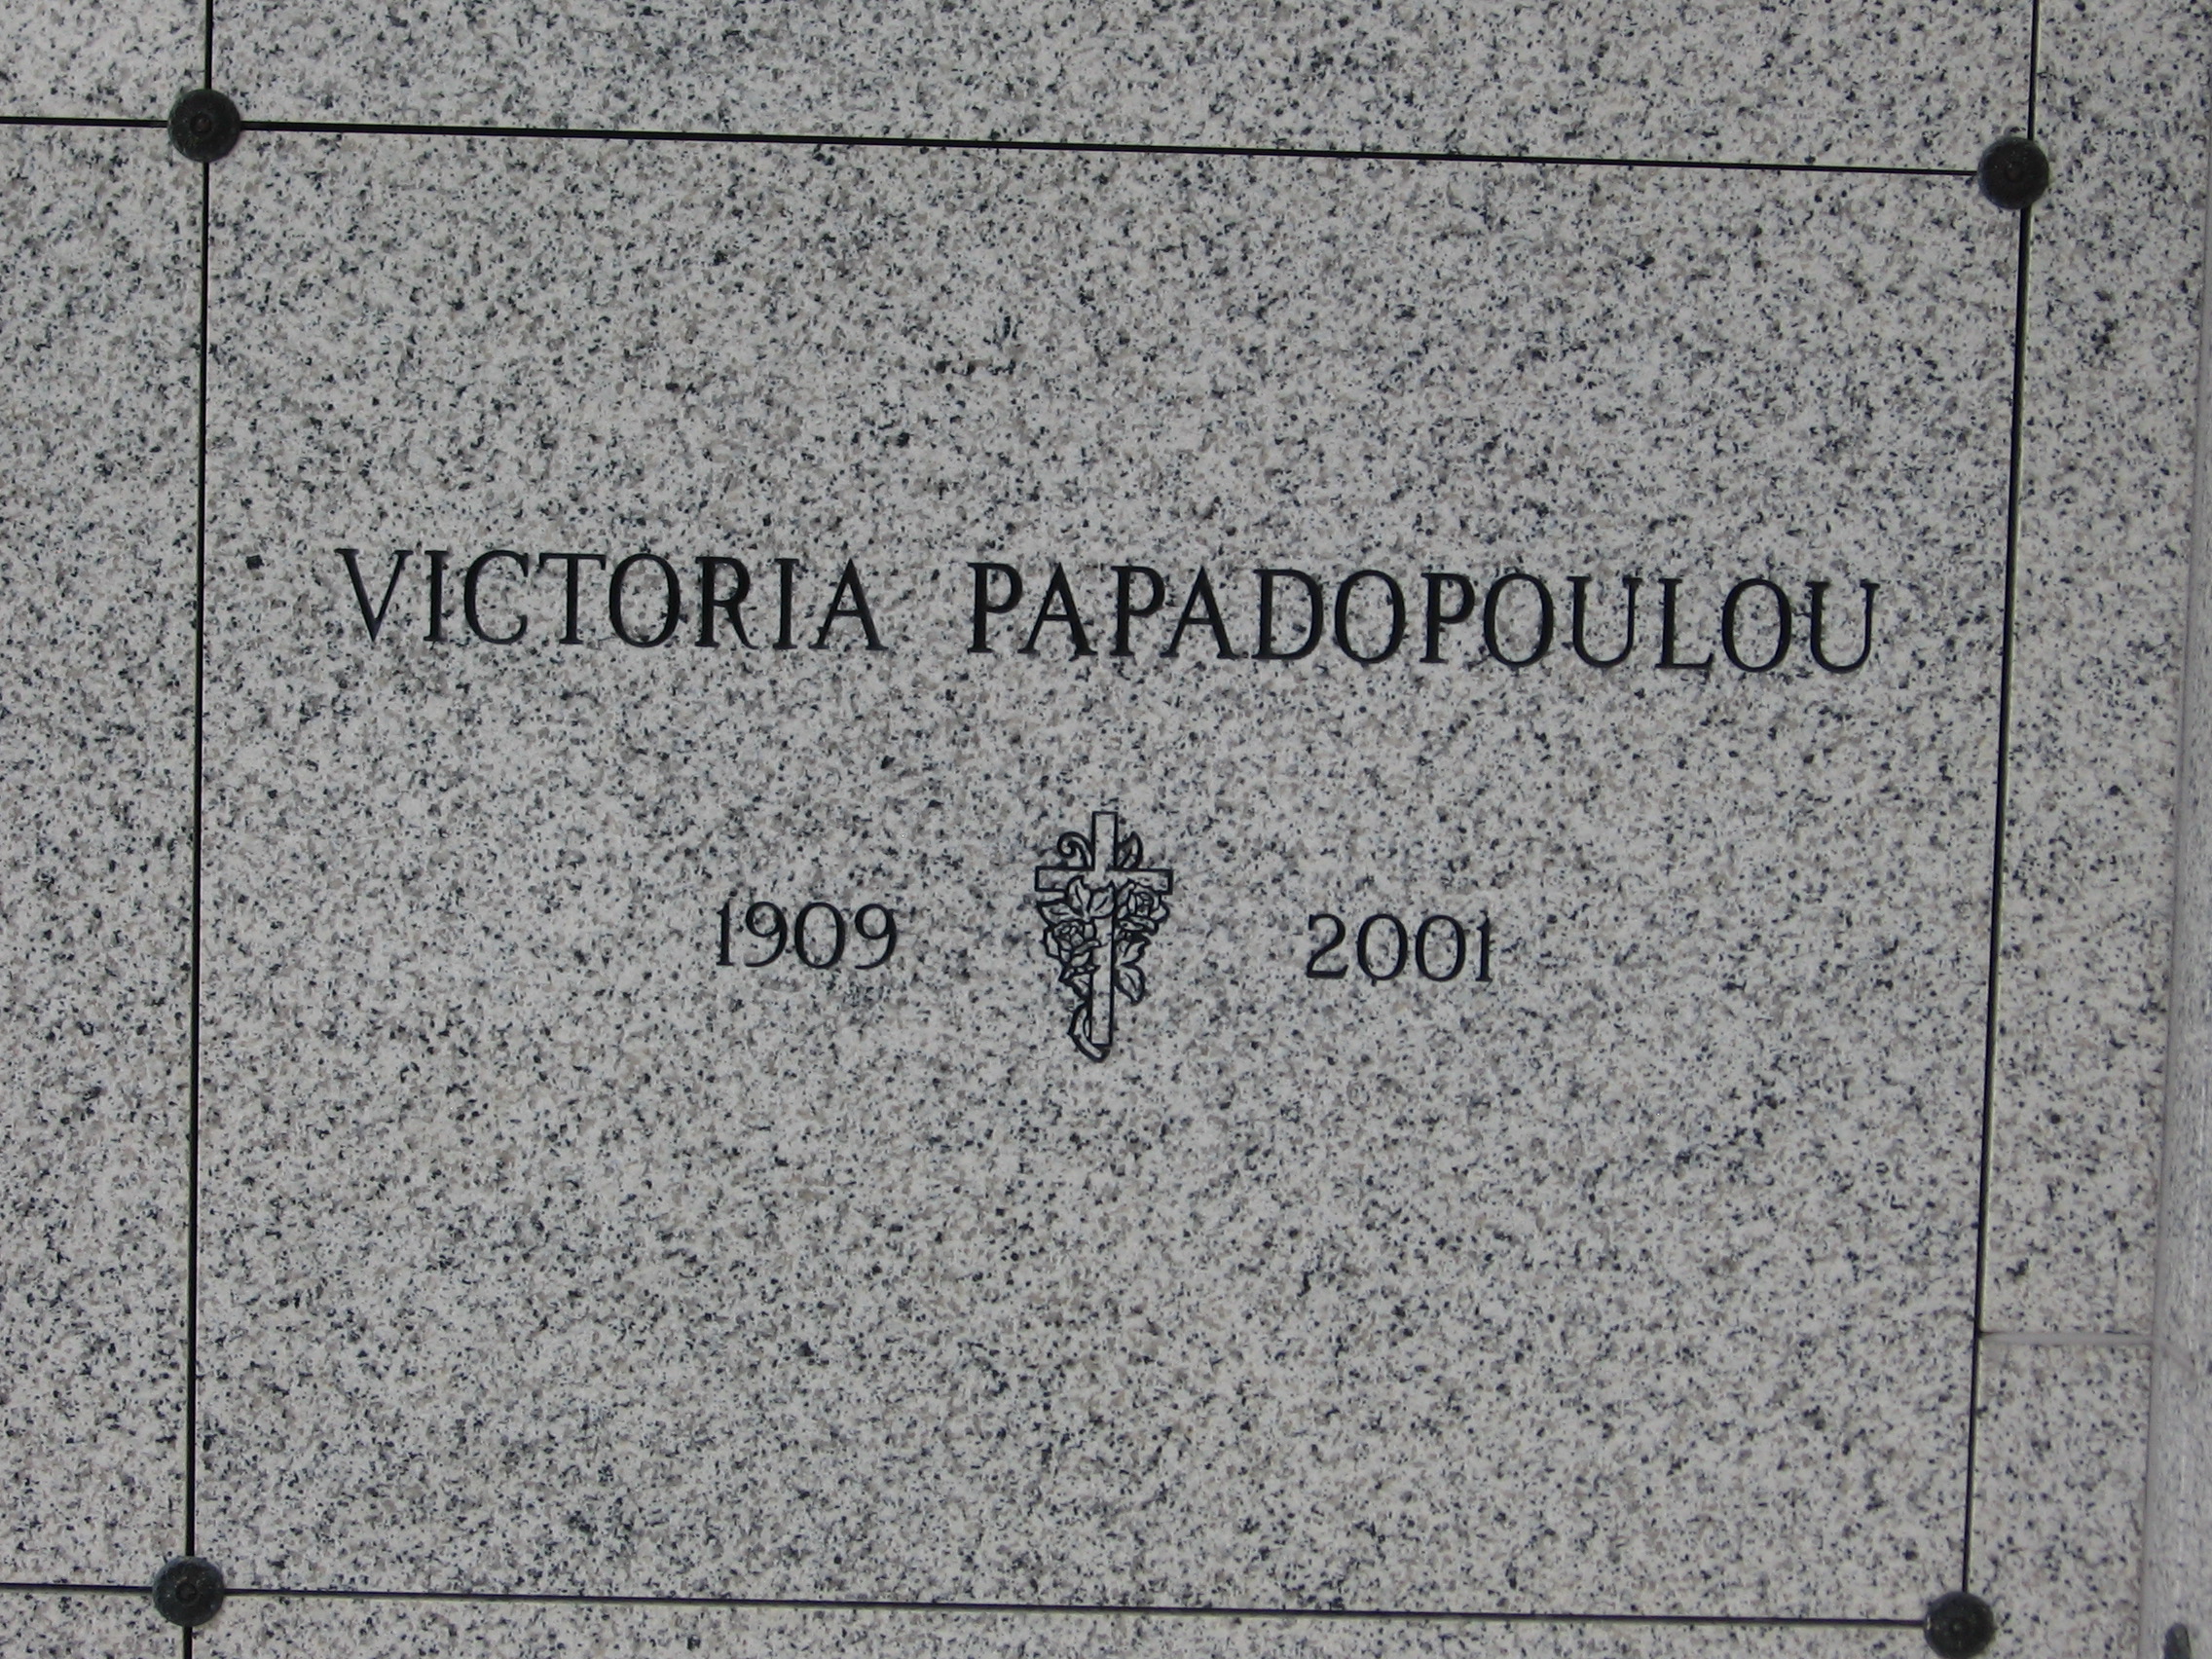 Victoria Papadopoulou